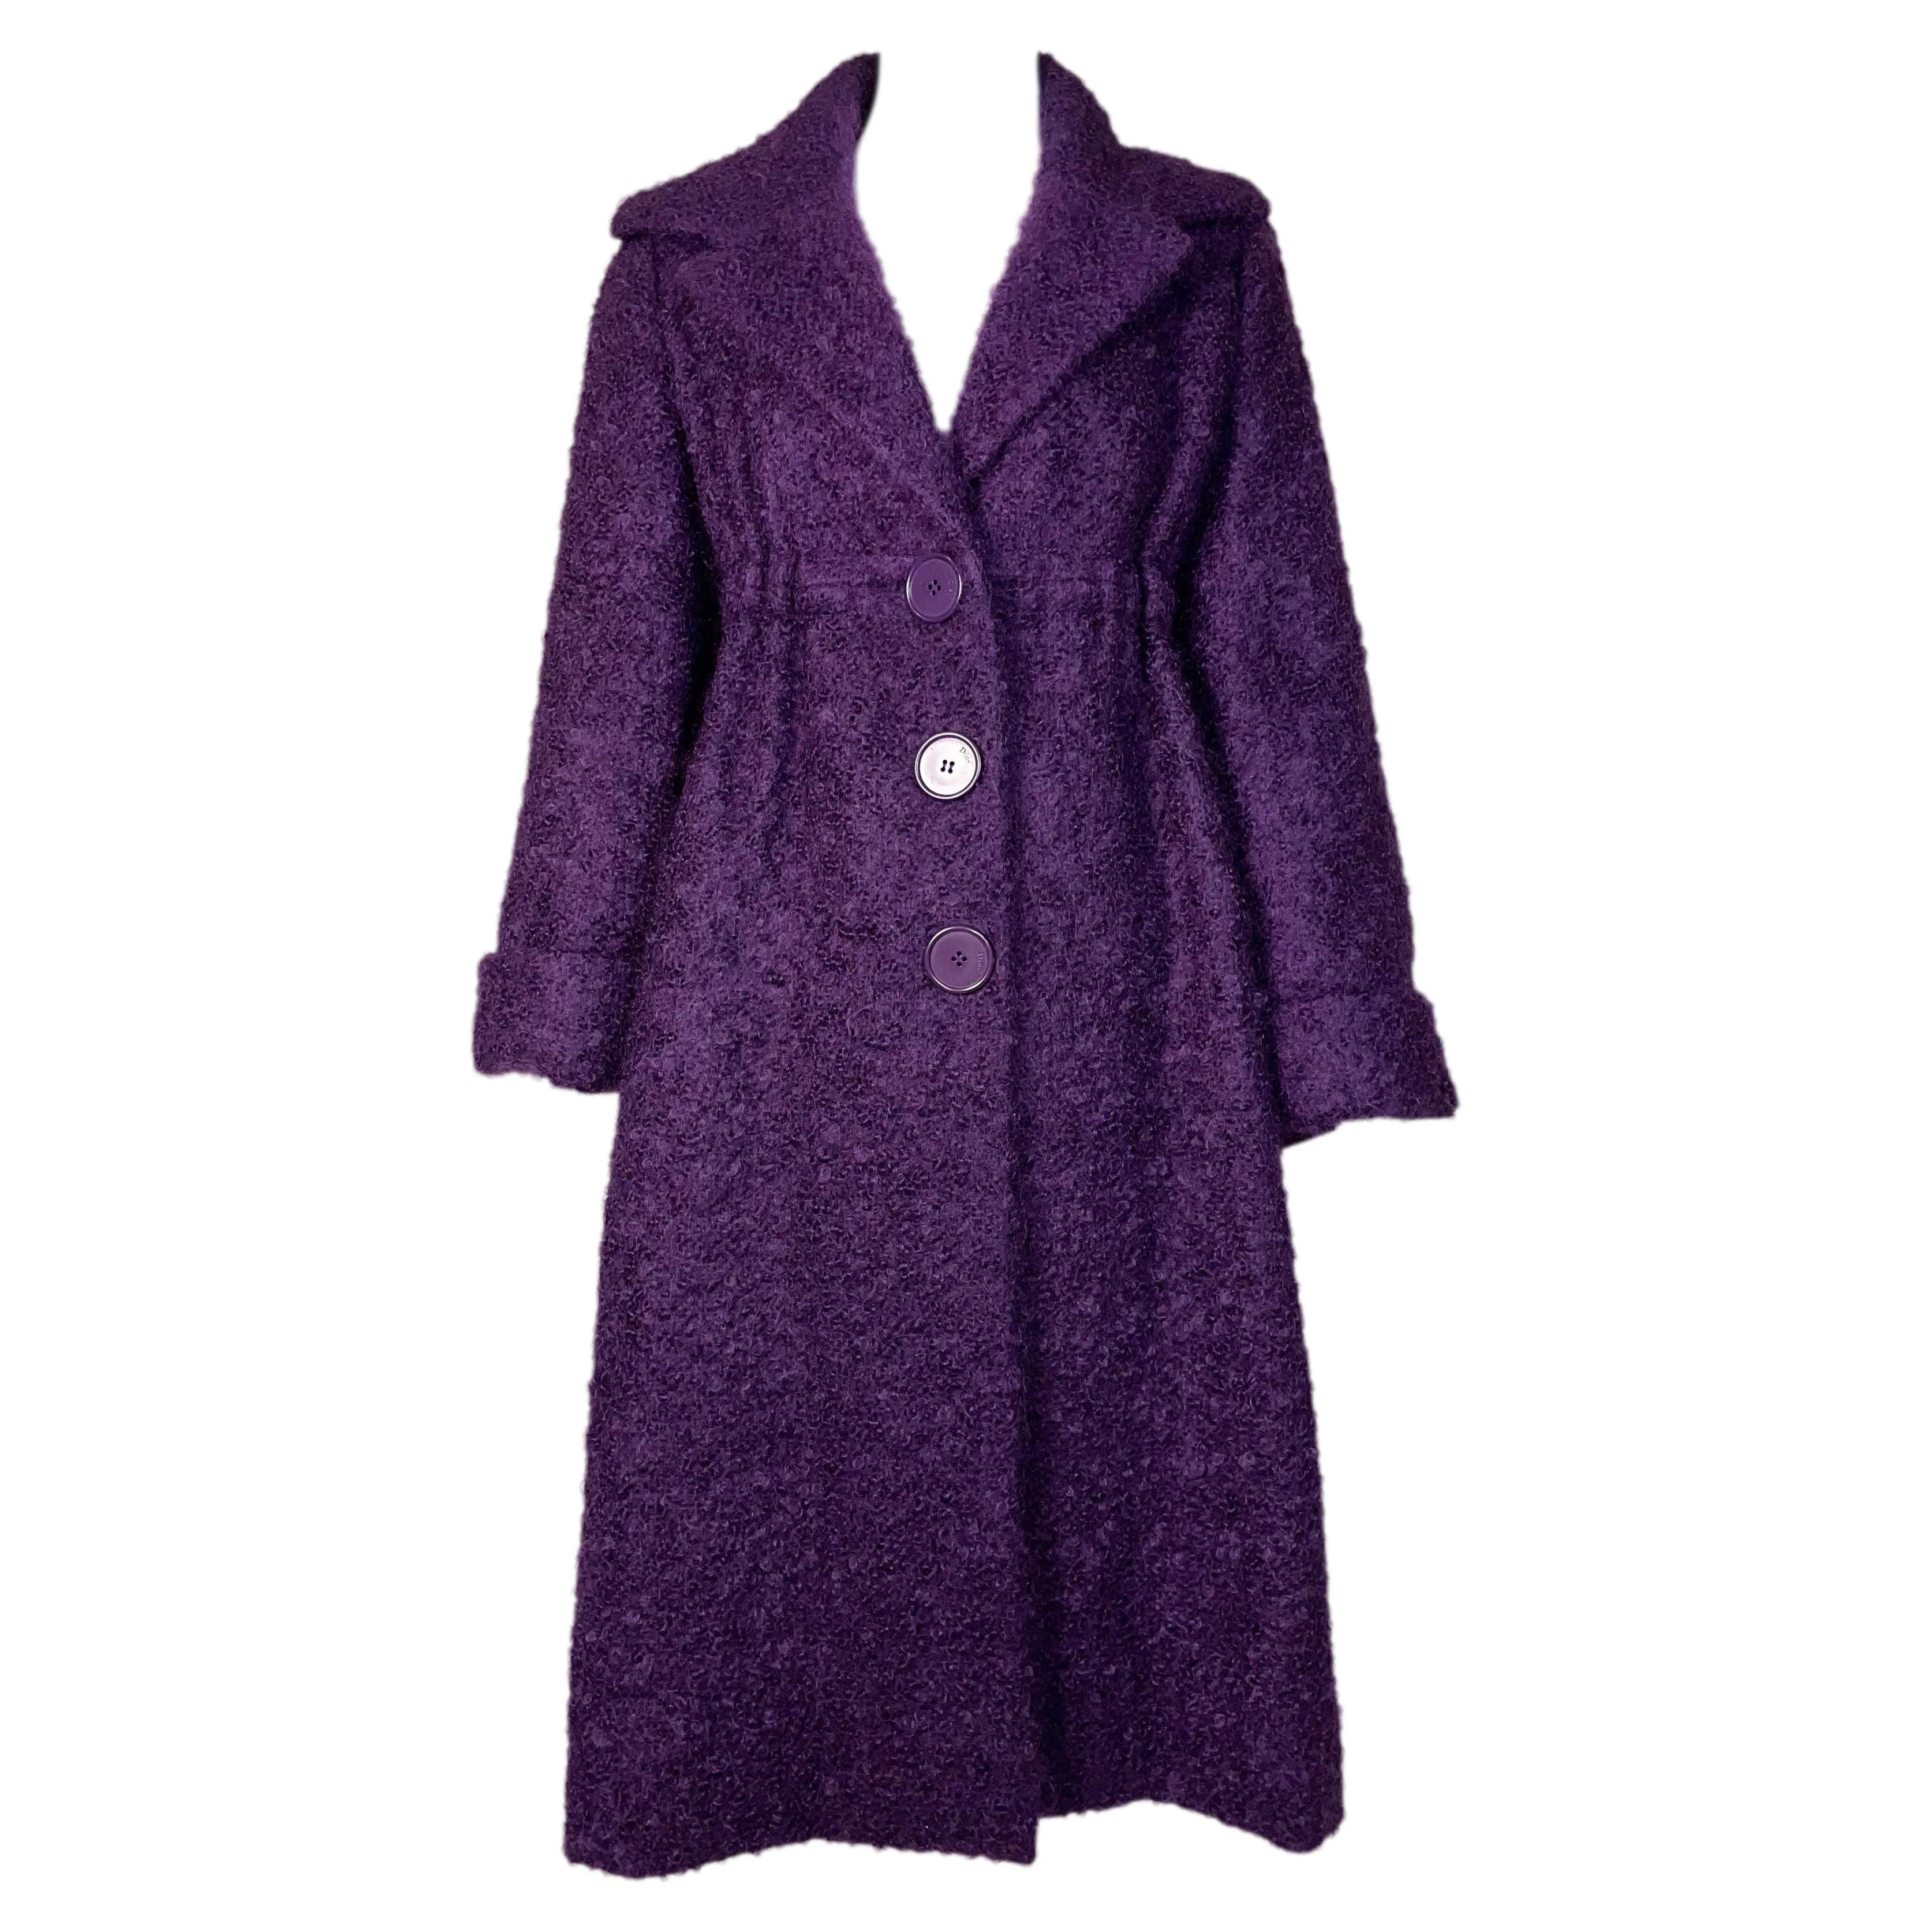 F/W 2009 Christian Dior by John Galliano Haute Couture 1960's Style Purple Coat For Sale